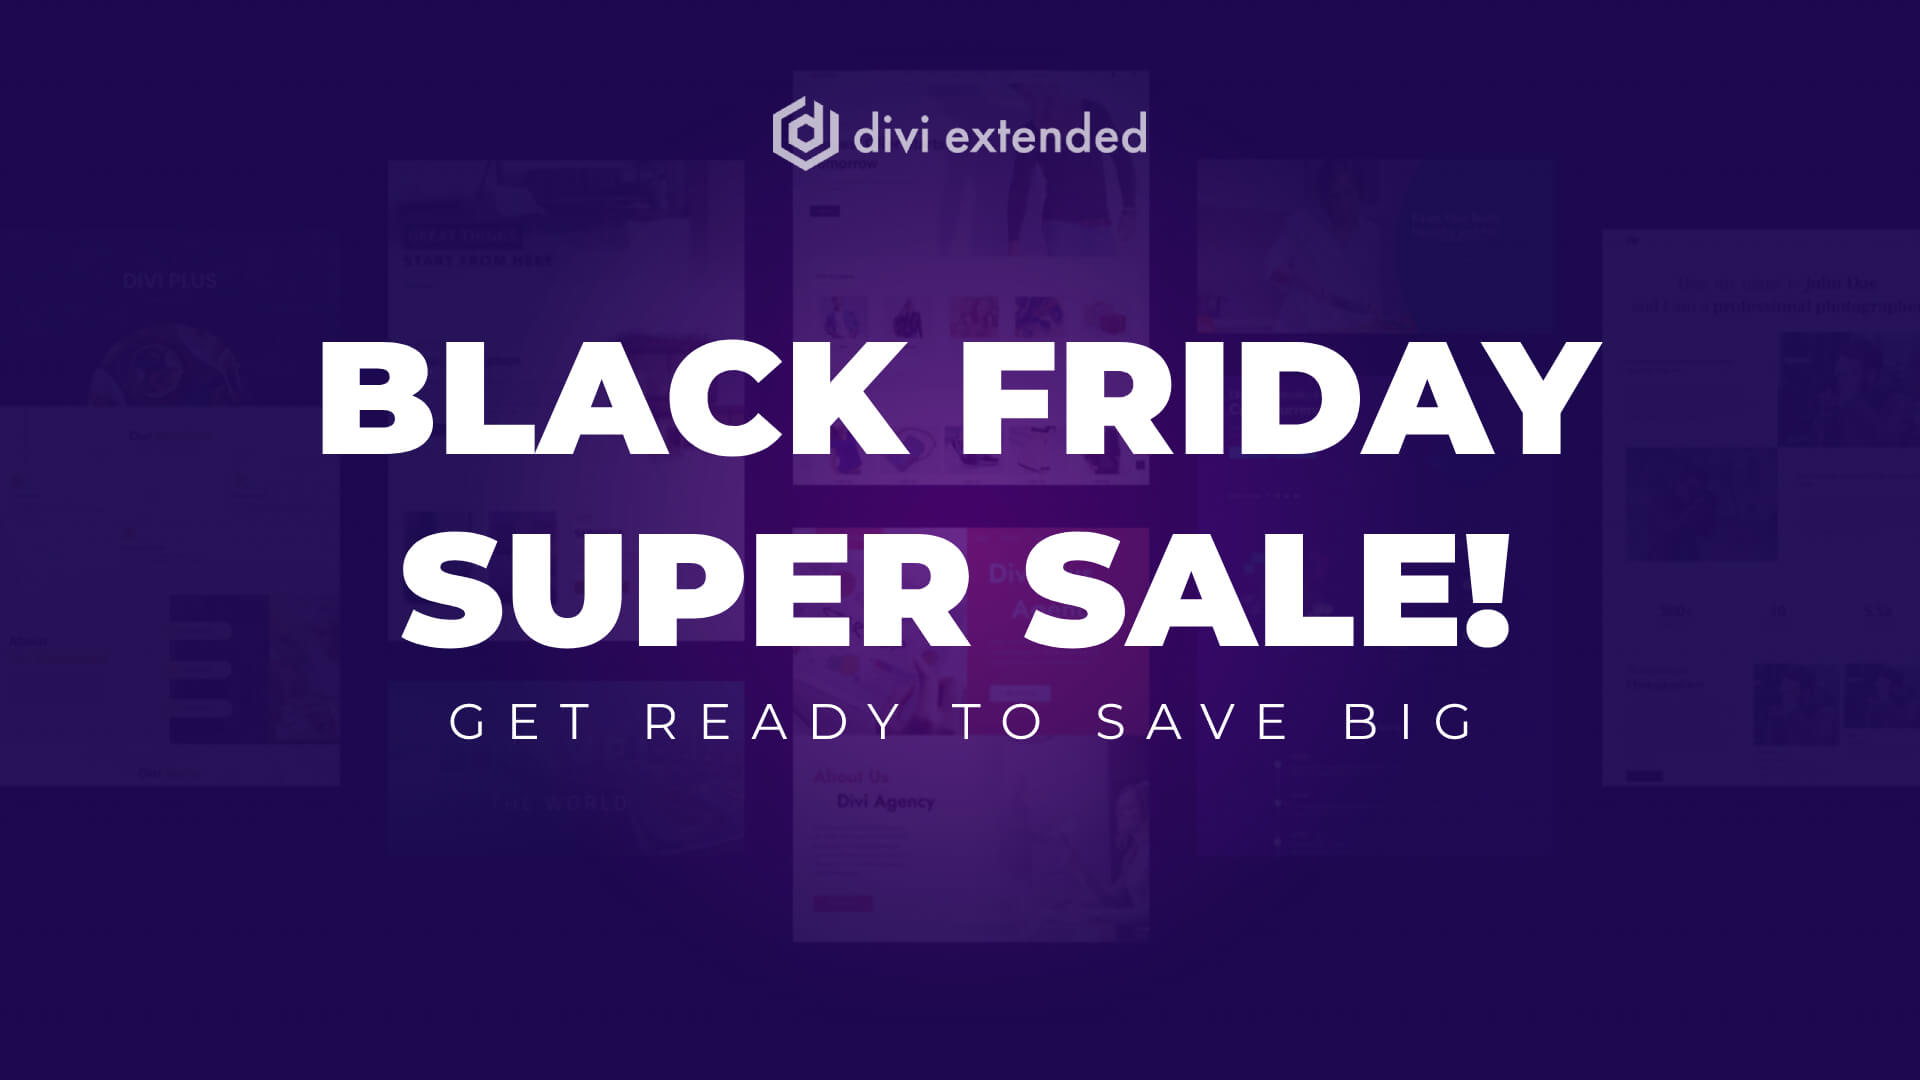 Get Ready for Divi Extended Black Friday Super Sale 2021